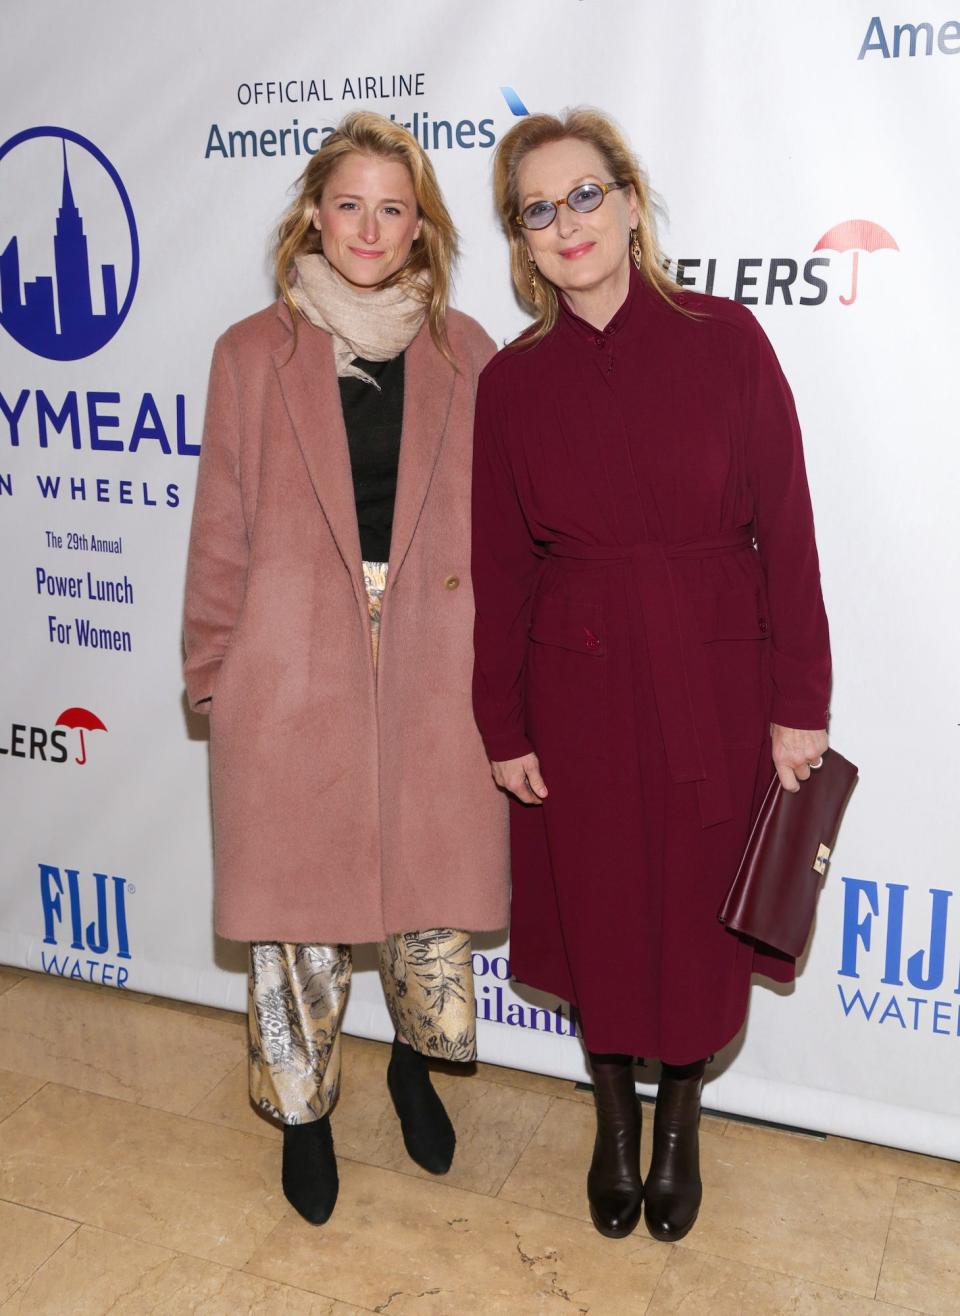 Mamie Gummer and Meryl Streep on a red carpet in November 2015.